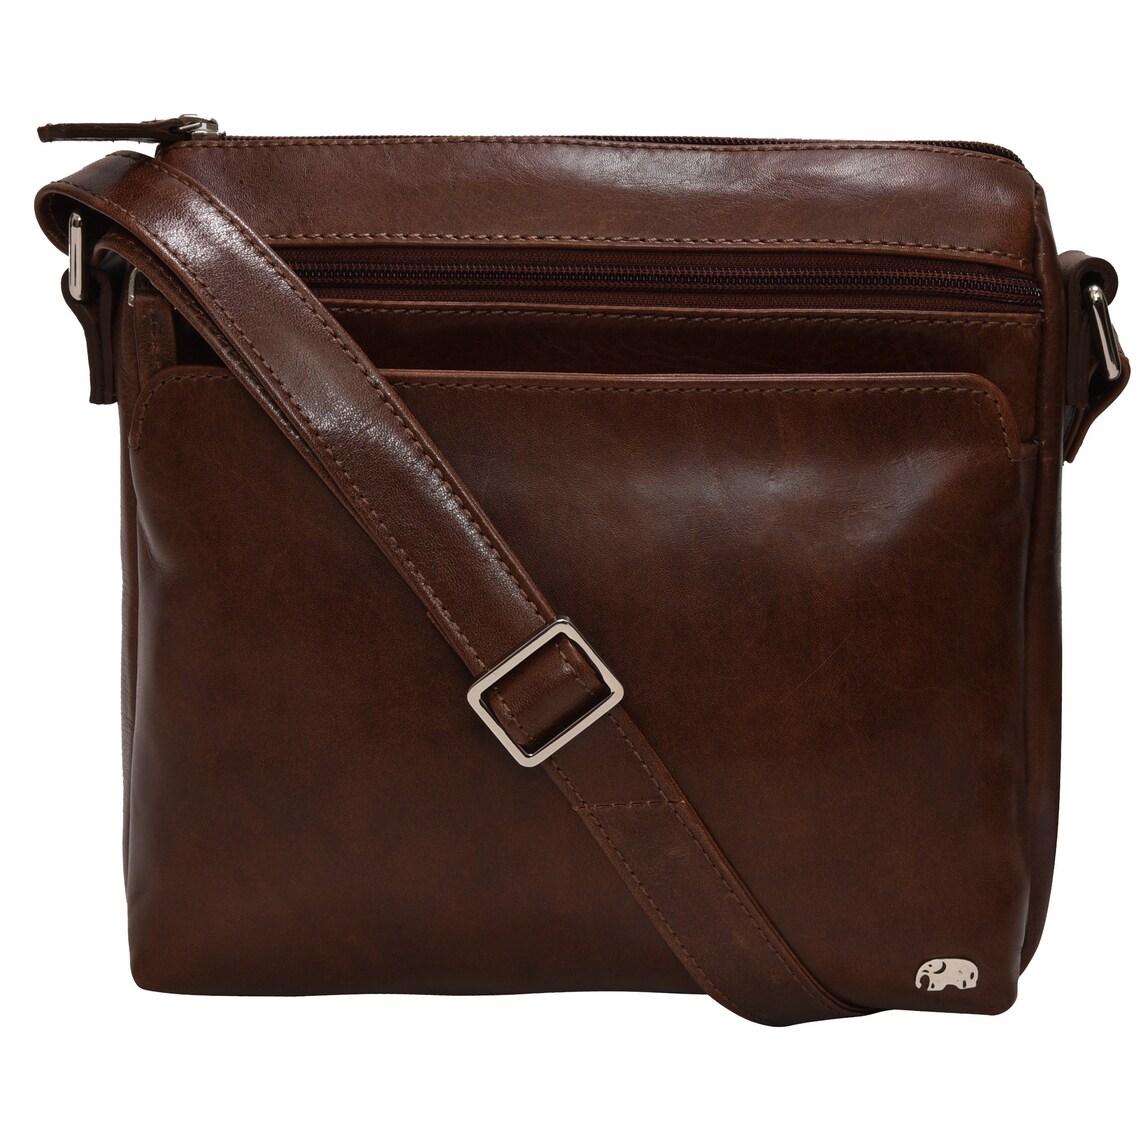 AVA Leather Crossbody Bag Shoulder Bag Bag Purse with Long | Etsy